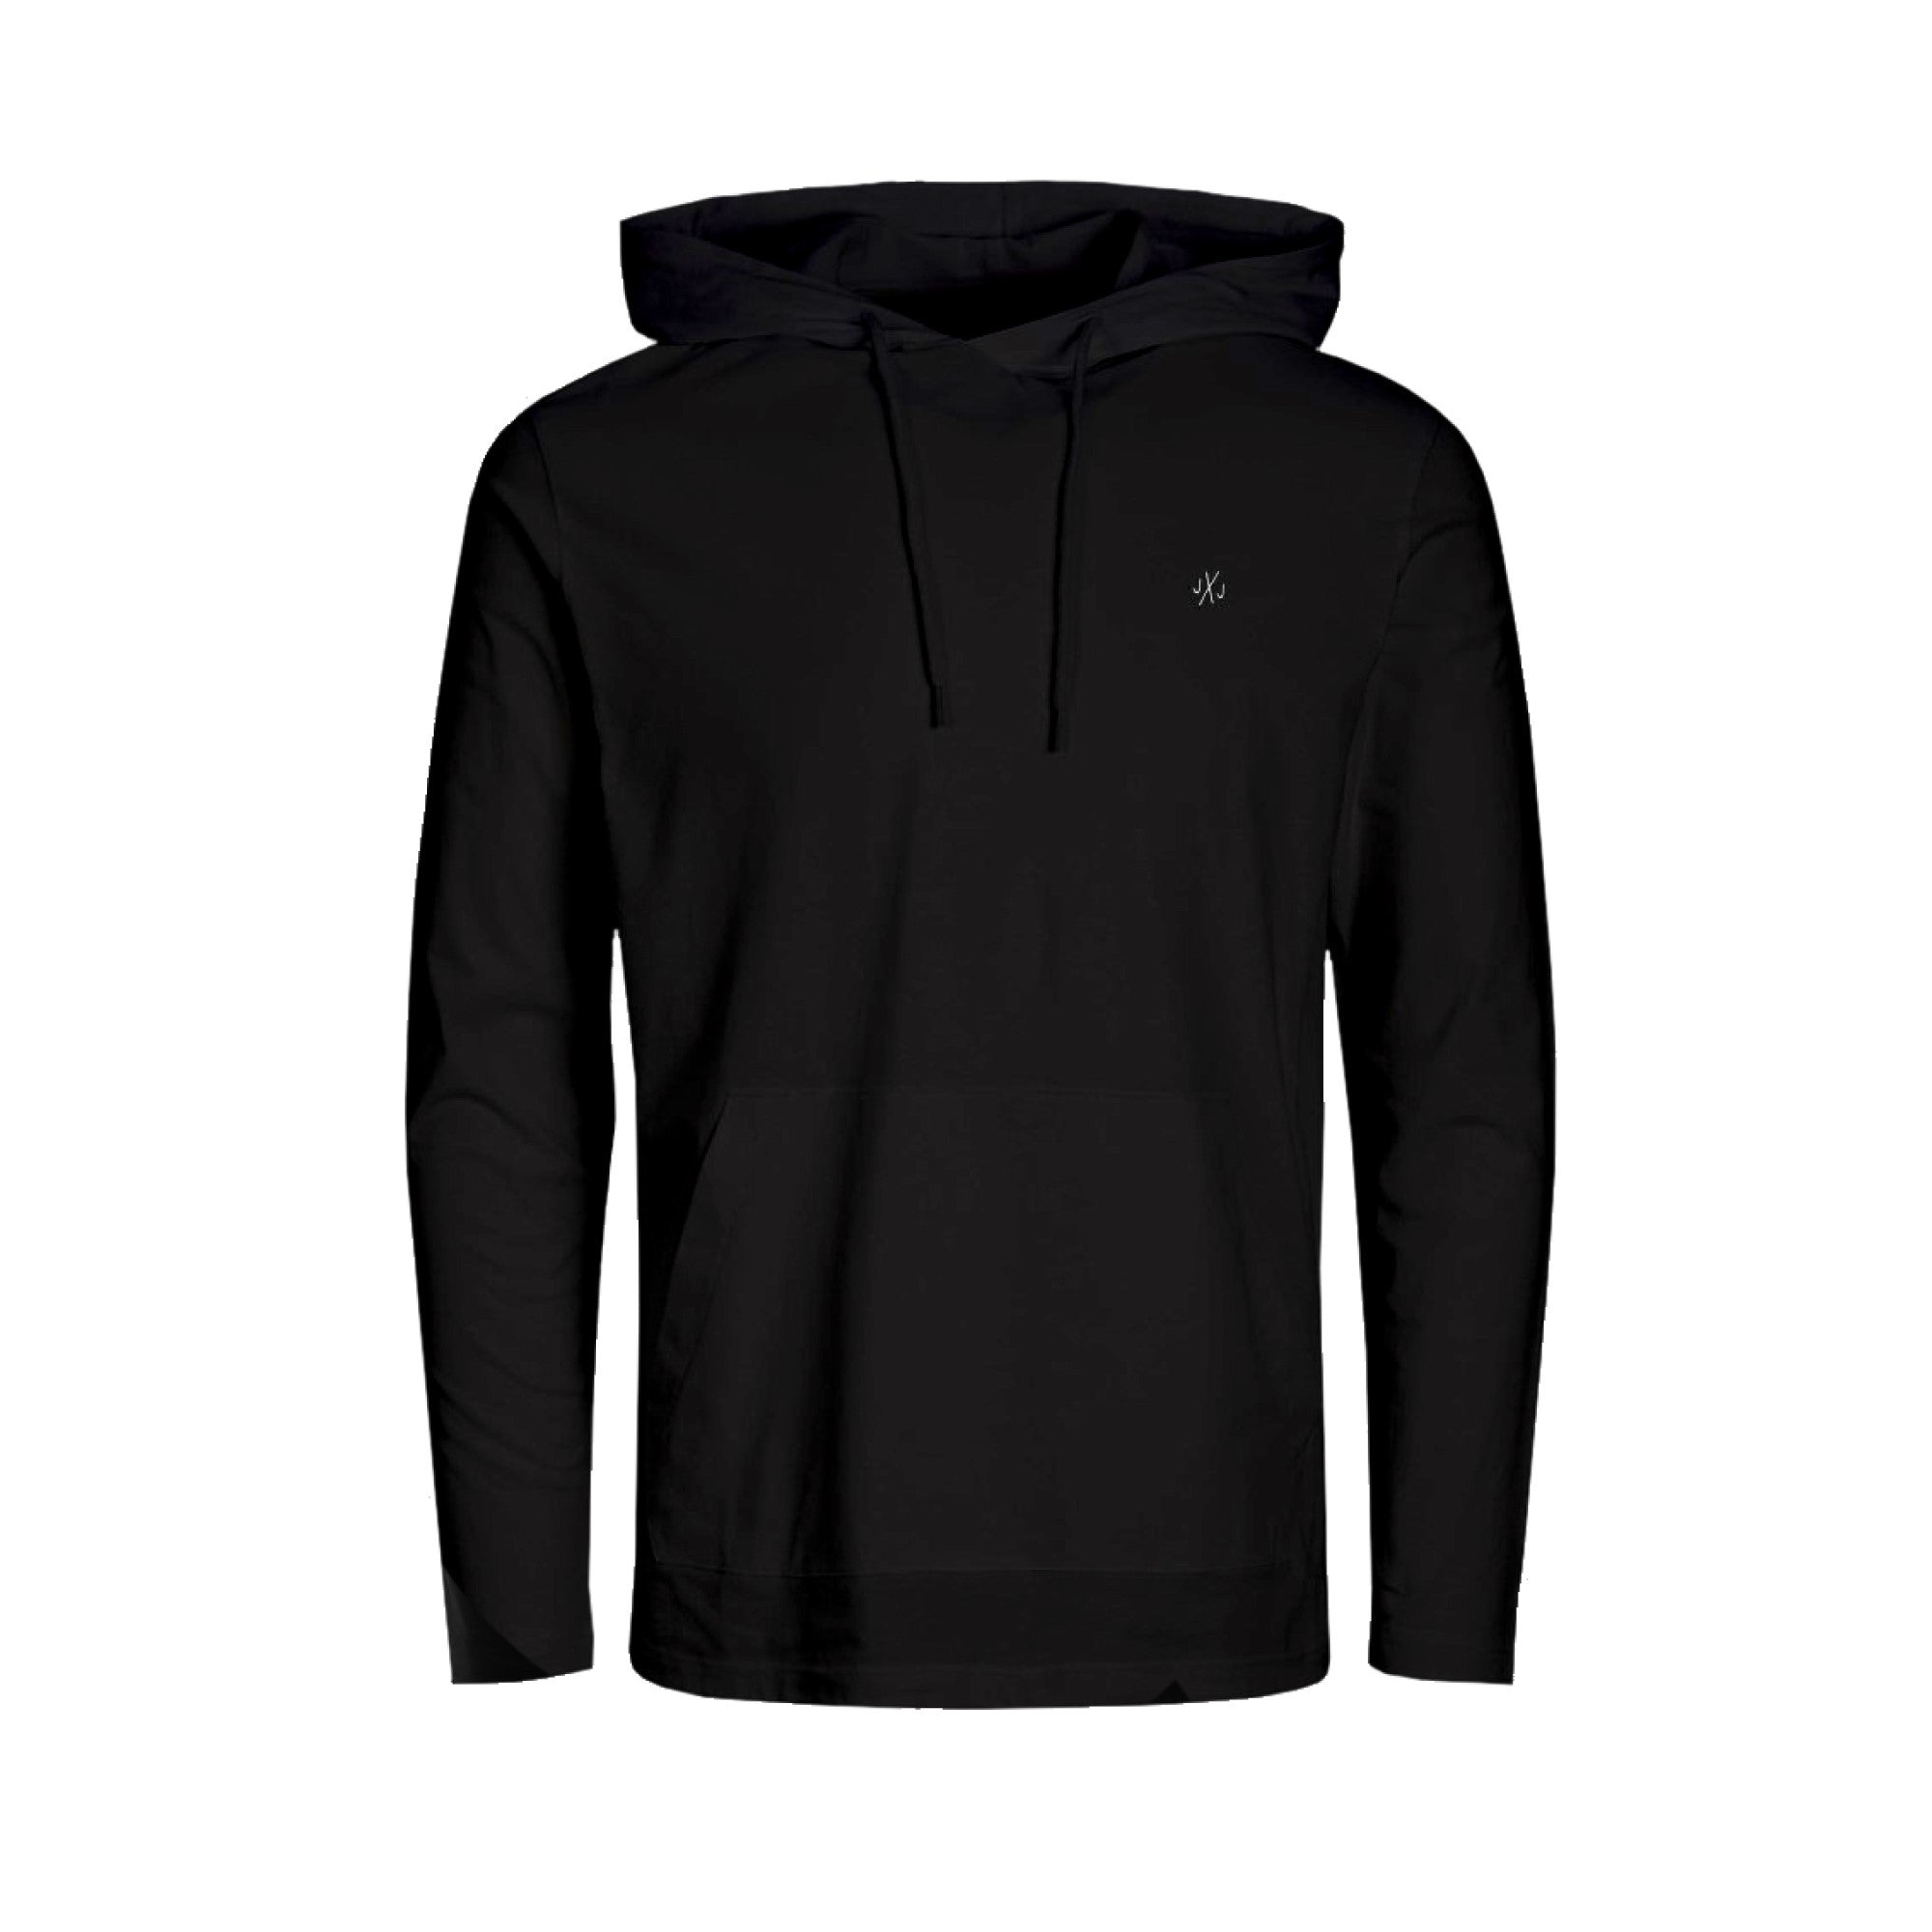 Jack & Jones Long Sleeve Hooded T Shirt - Black - X Large